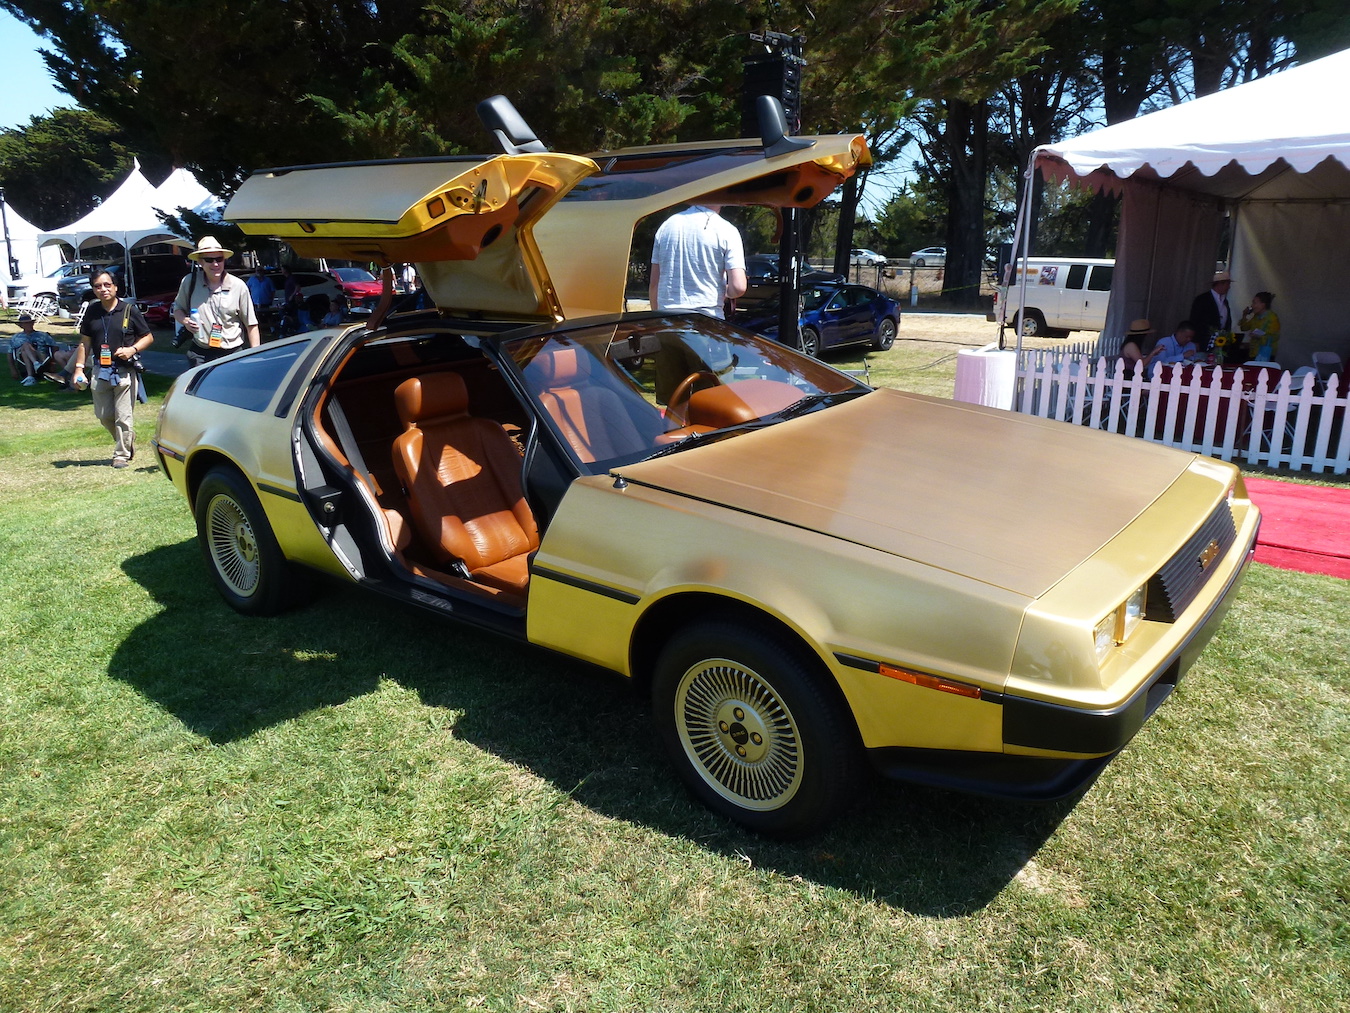 An Original Gold Plated DeLorean